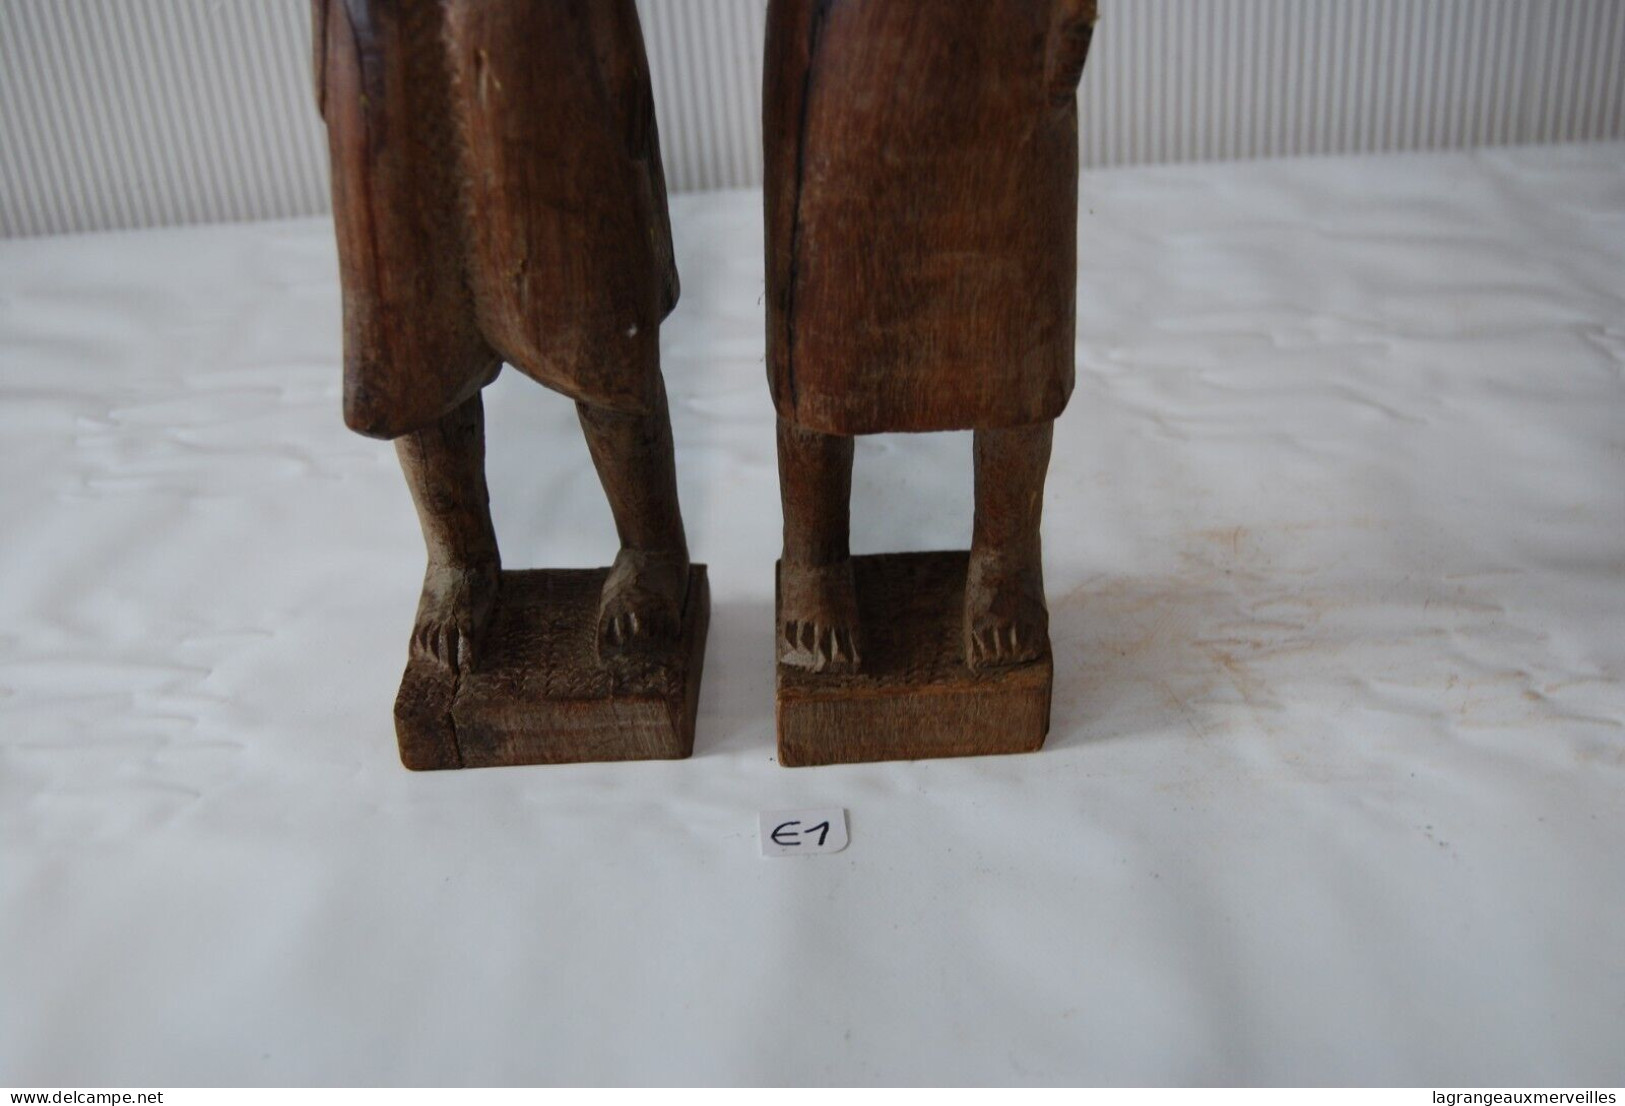 E1 Ancien Couple Buste Africain - Outil Ancien - Ethnique - Tribal H42 - Arte Africana